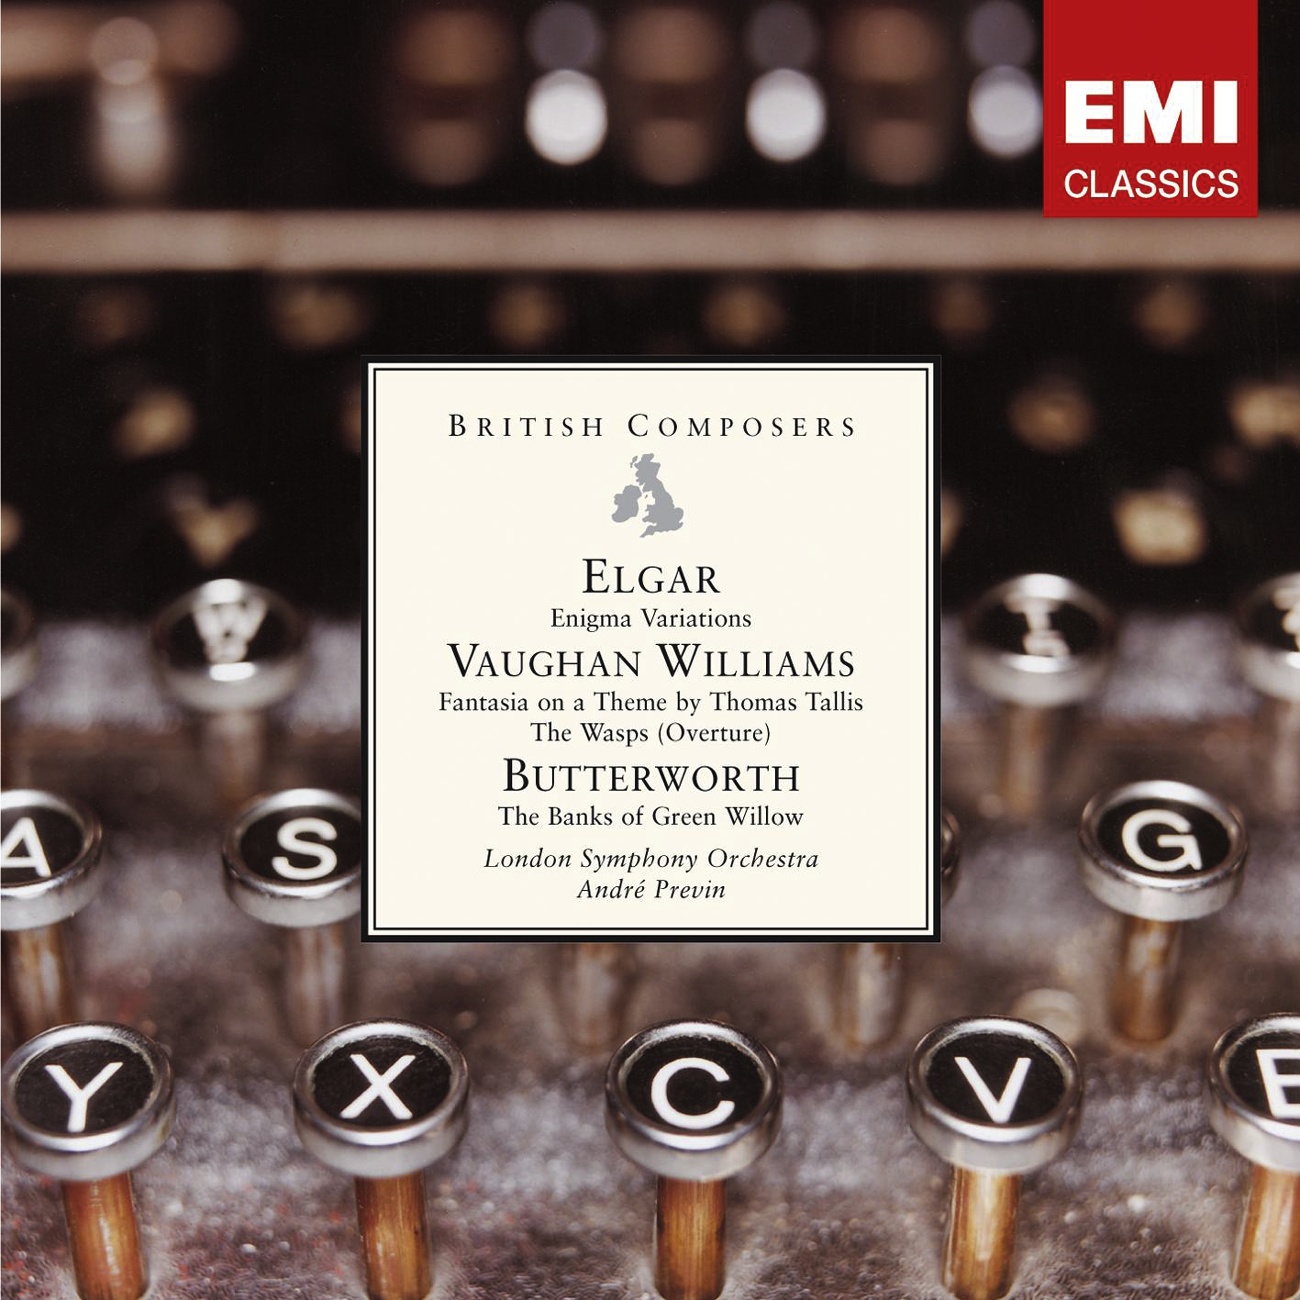 Variations on an Original Theme 'Enigma' Op. 36 (2007 Digital Remaster): VII.   Troyte (Troyte Griffith) (Presto)